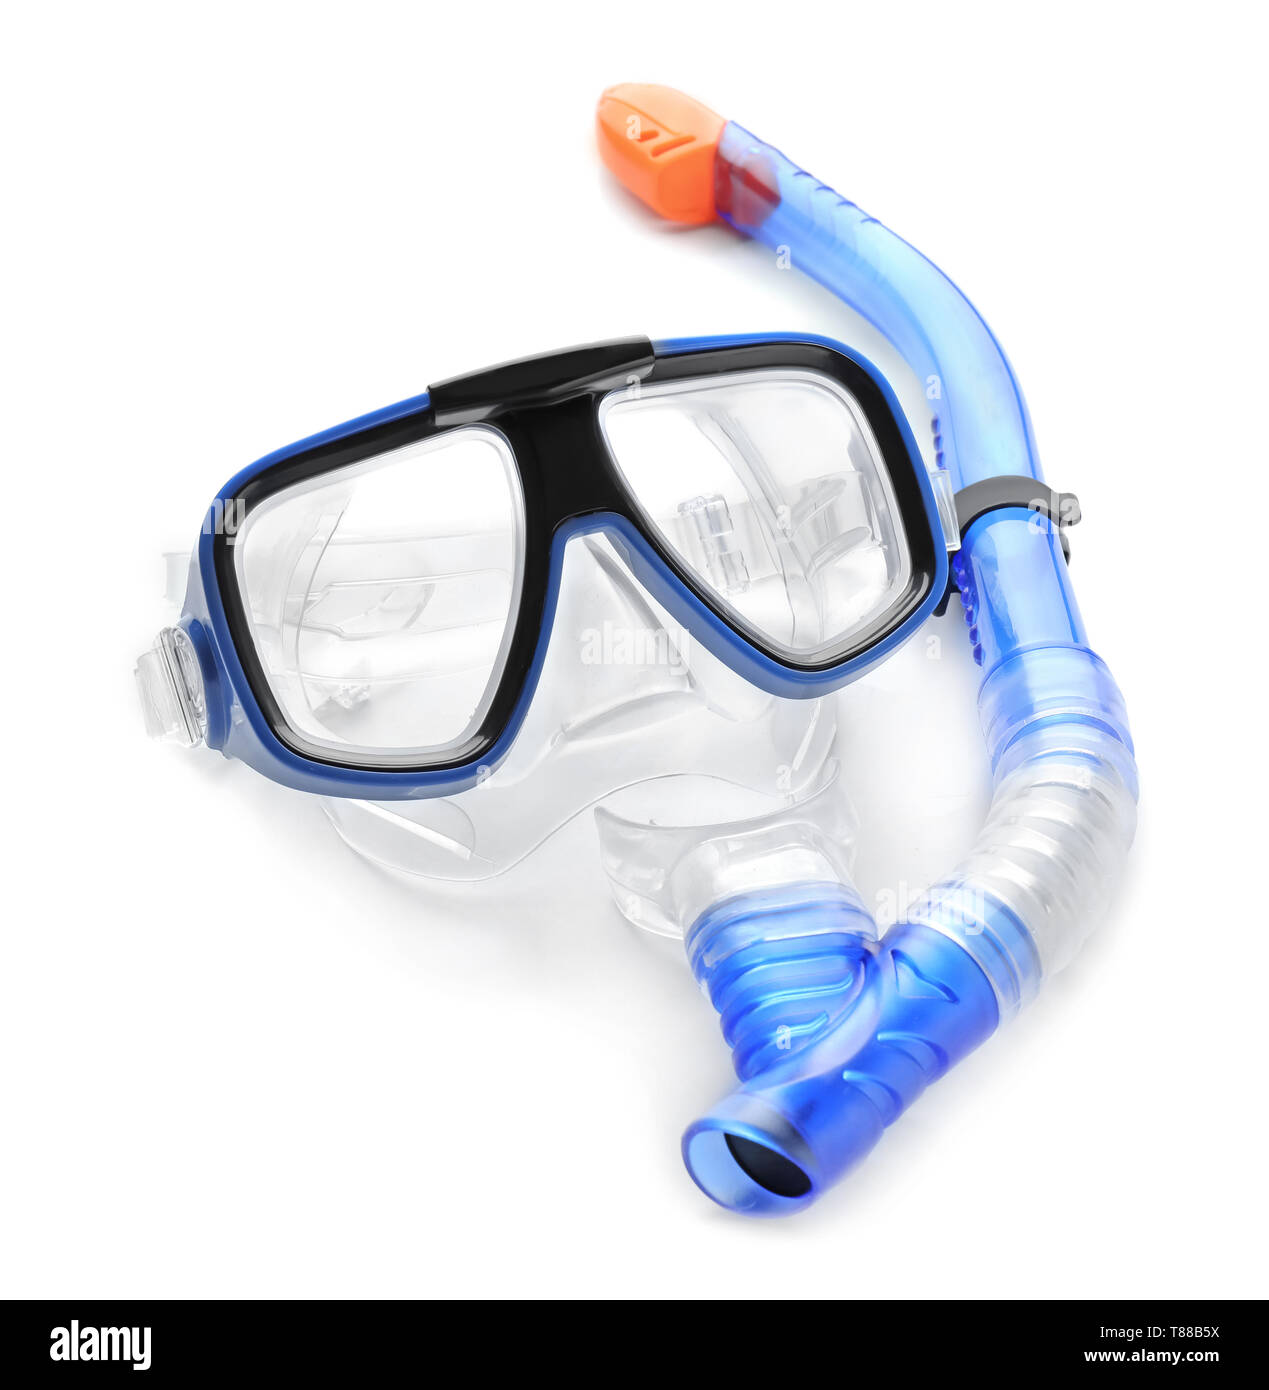 Set for snorkeling on white background Stock Photo